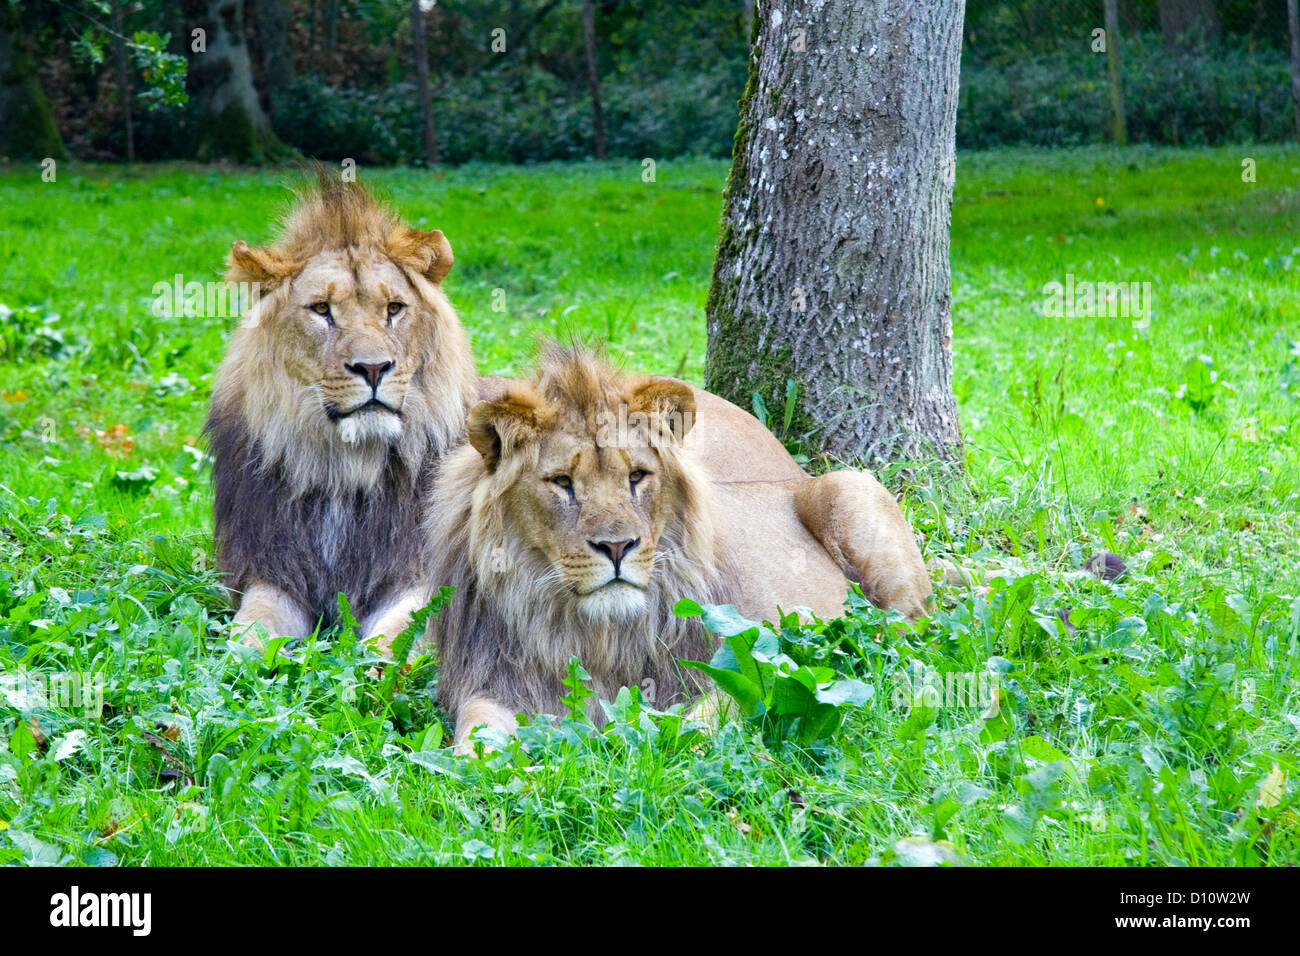 Two lions Longleat Safari Park Wiltshire UK Stock Photo